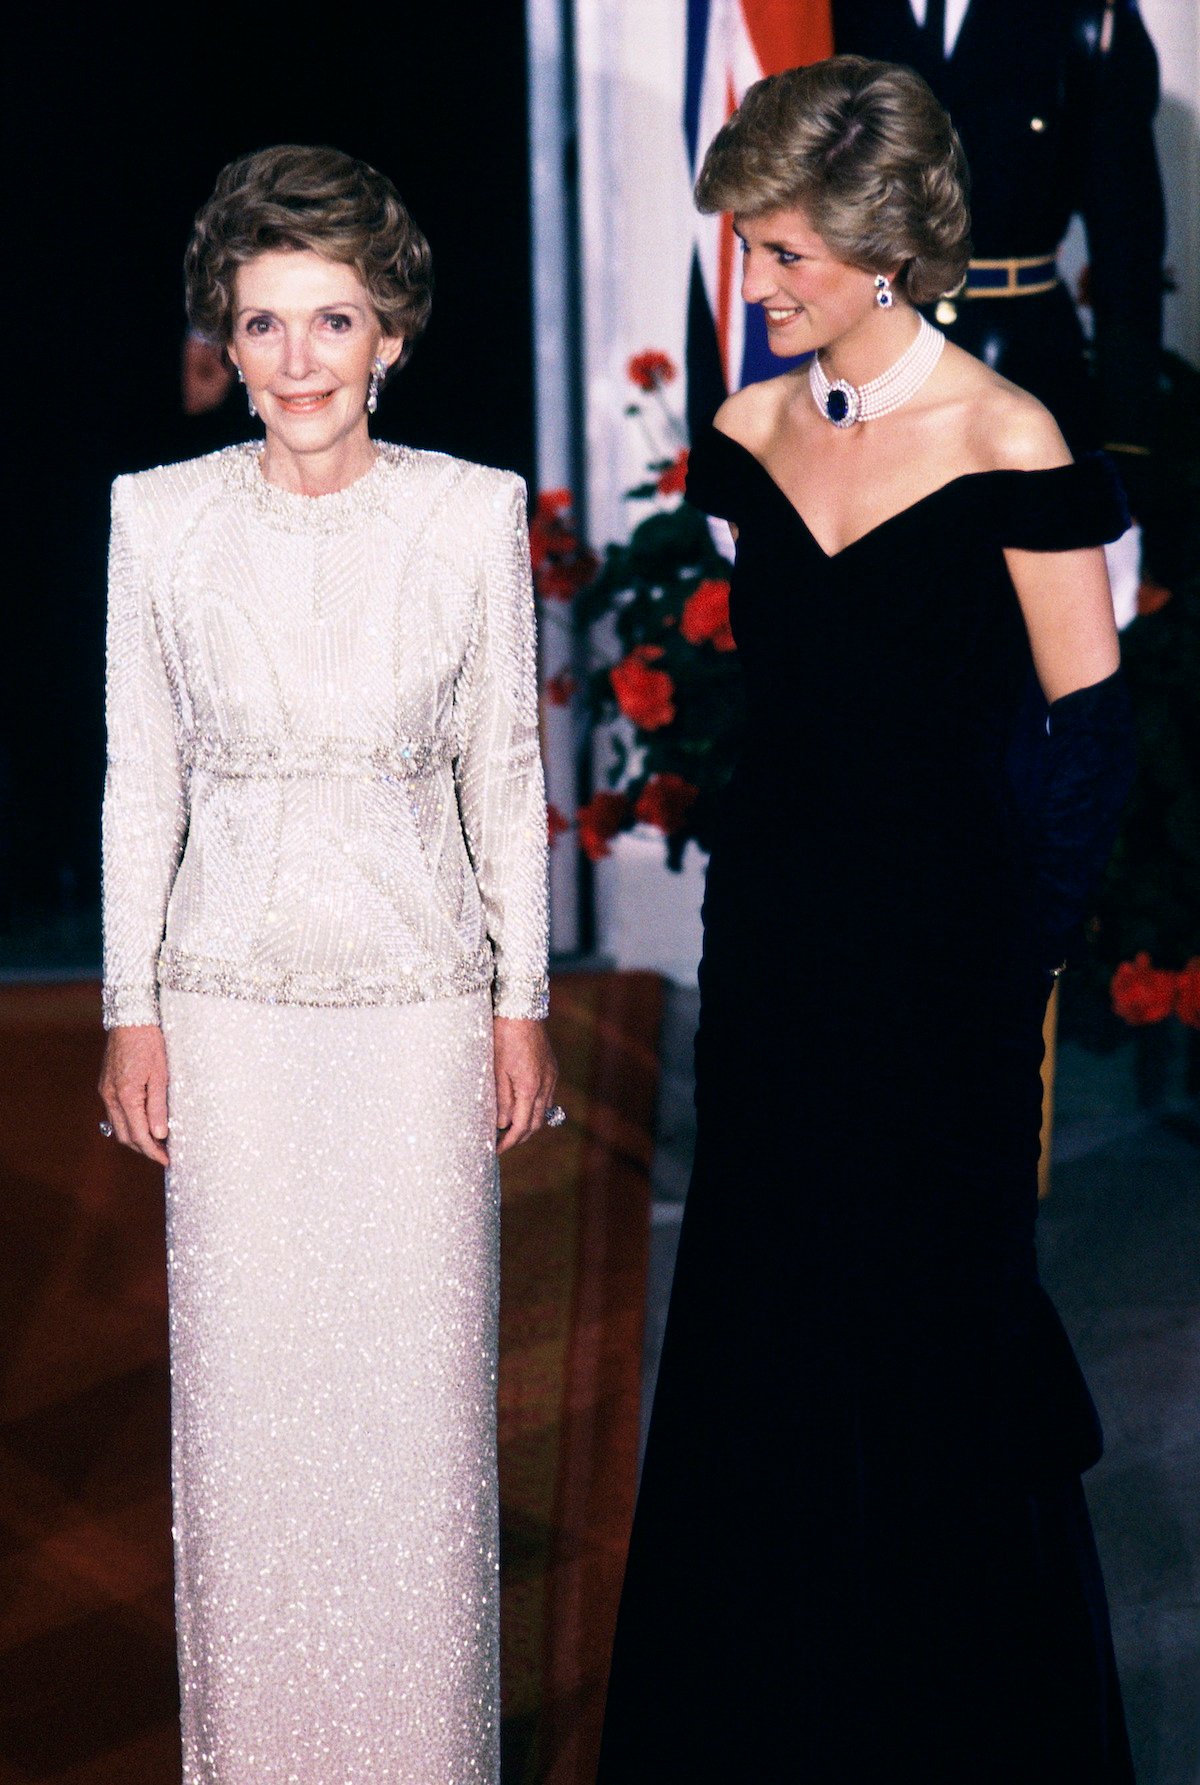 Nancy Reagan and Princess Diana in formalwear